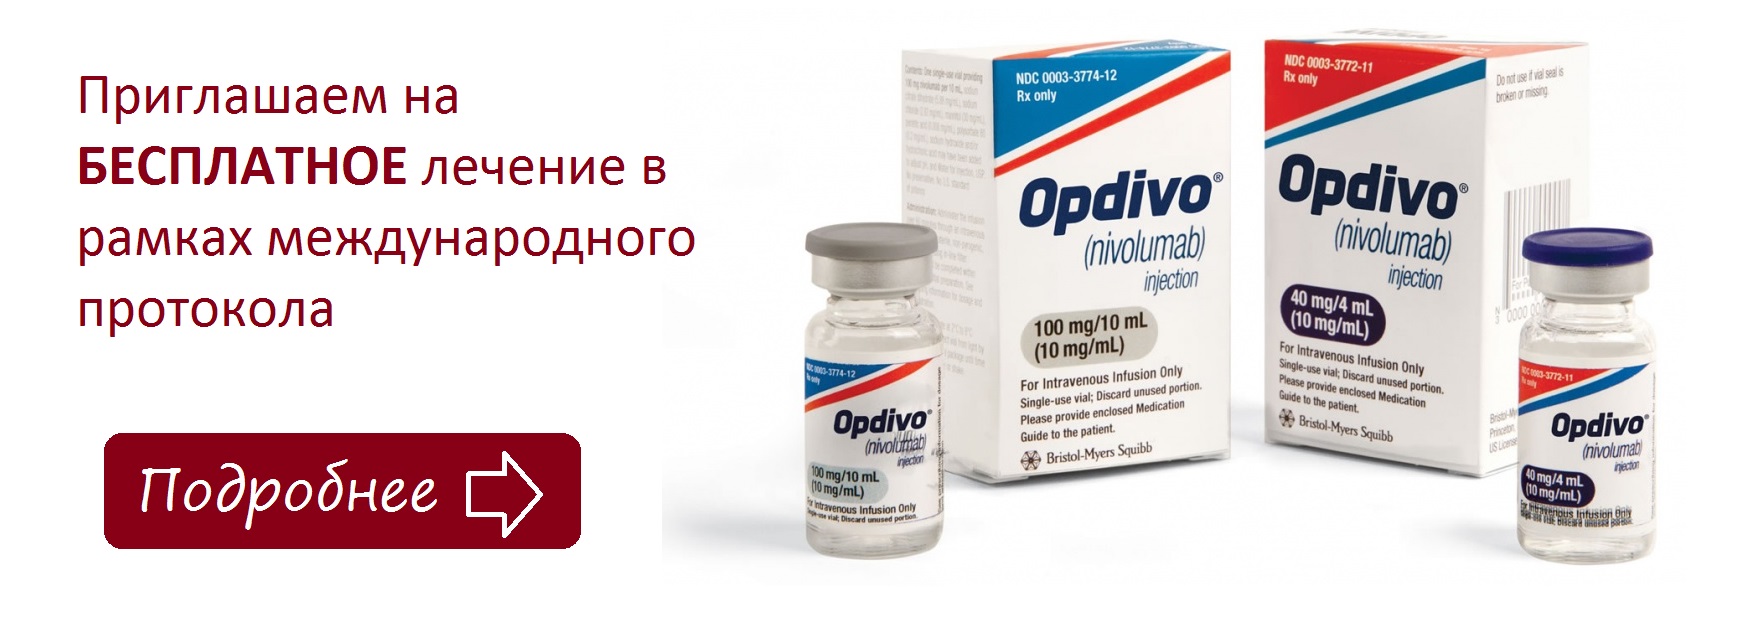 Опдиво® (Ниволумаб), ингибитор